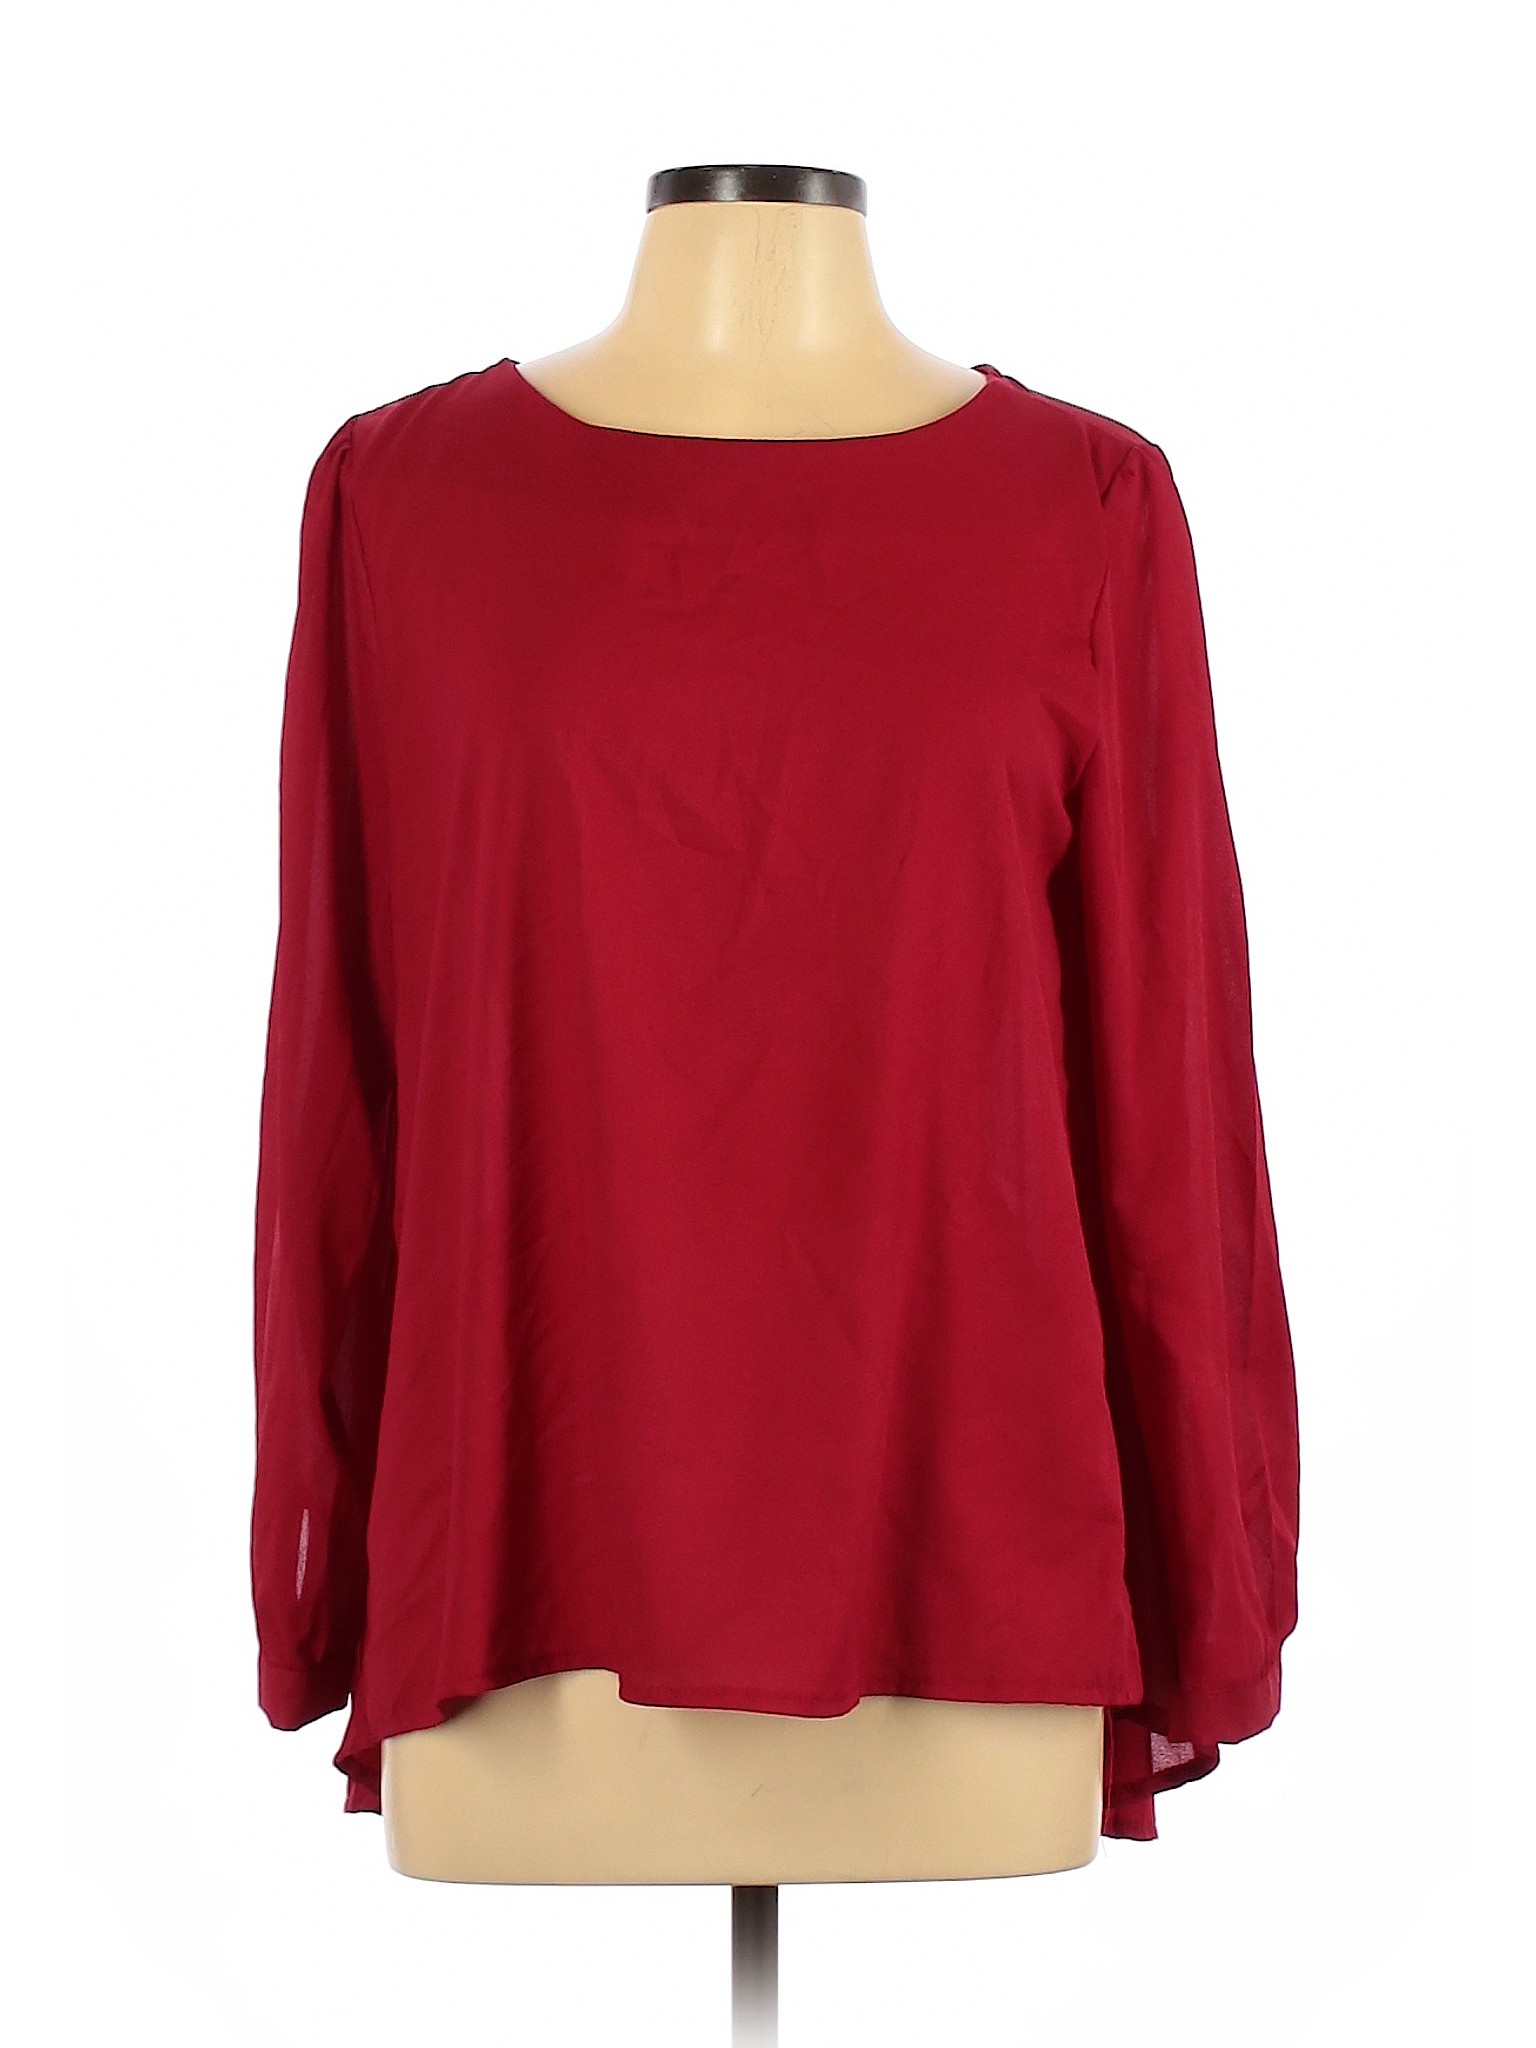 Zanzea Collection Women Red 3/4 Sleeve Blouse 12 | eBay